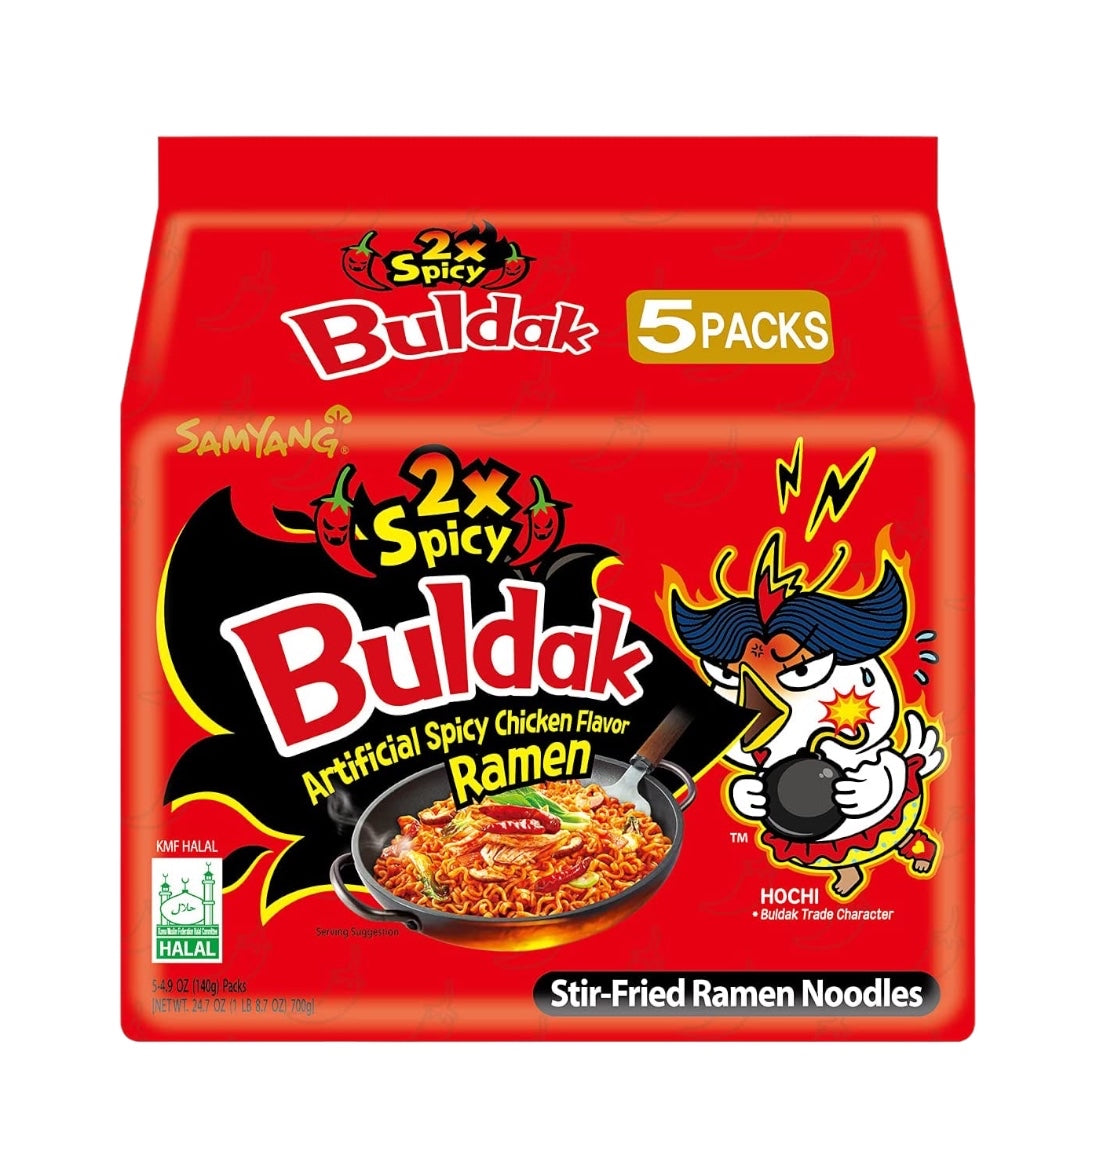 Buldak Ramen - 2x Spicy (5 Pack) HALAL